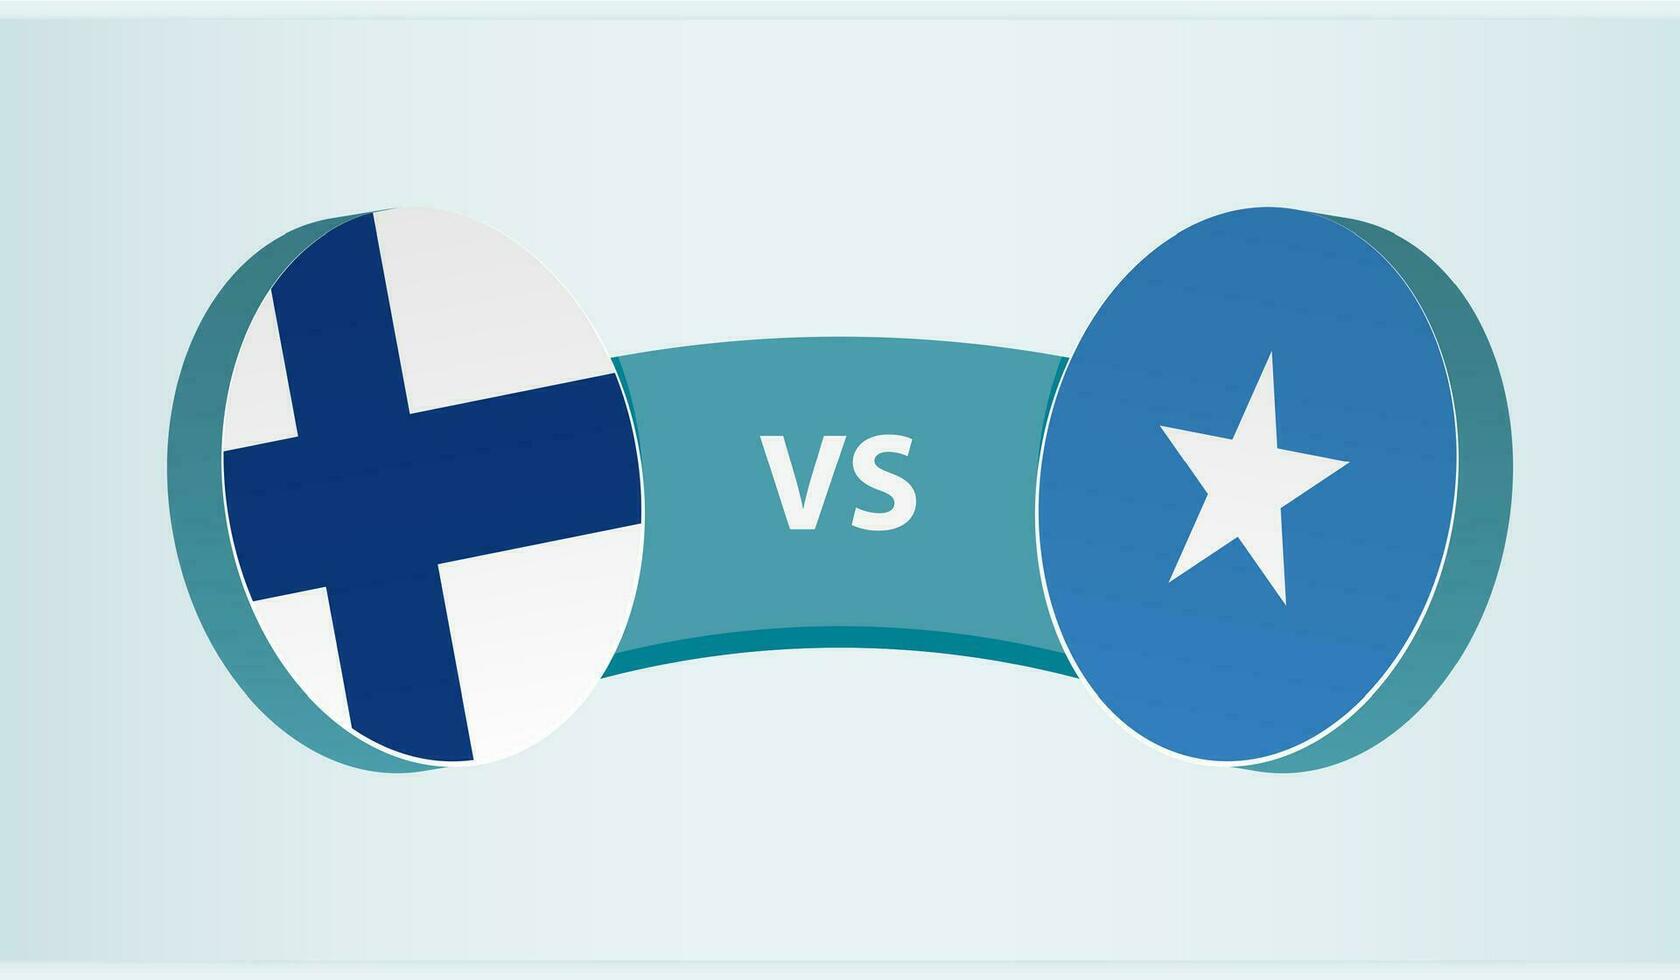 Finland versus Somalia, team sports competition concept. vector